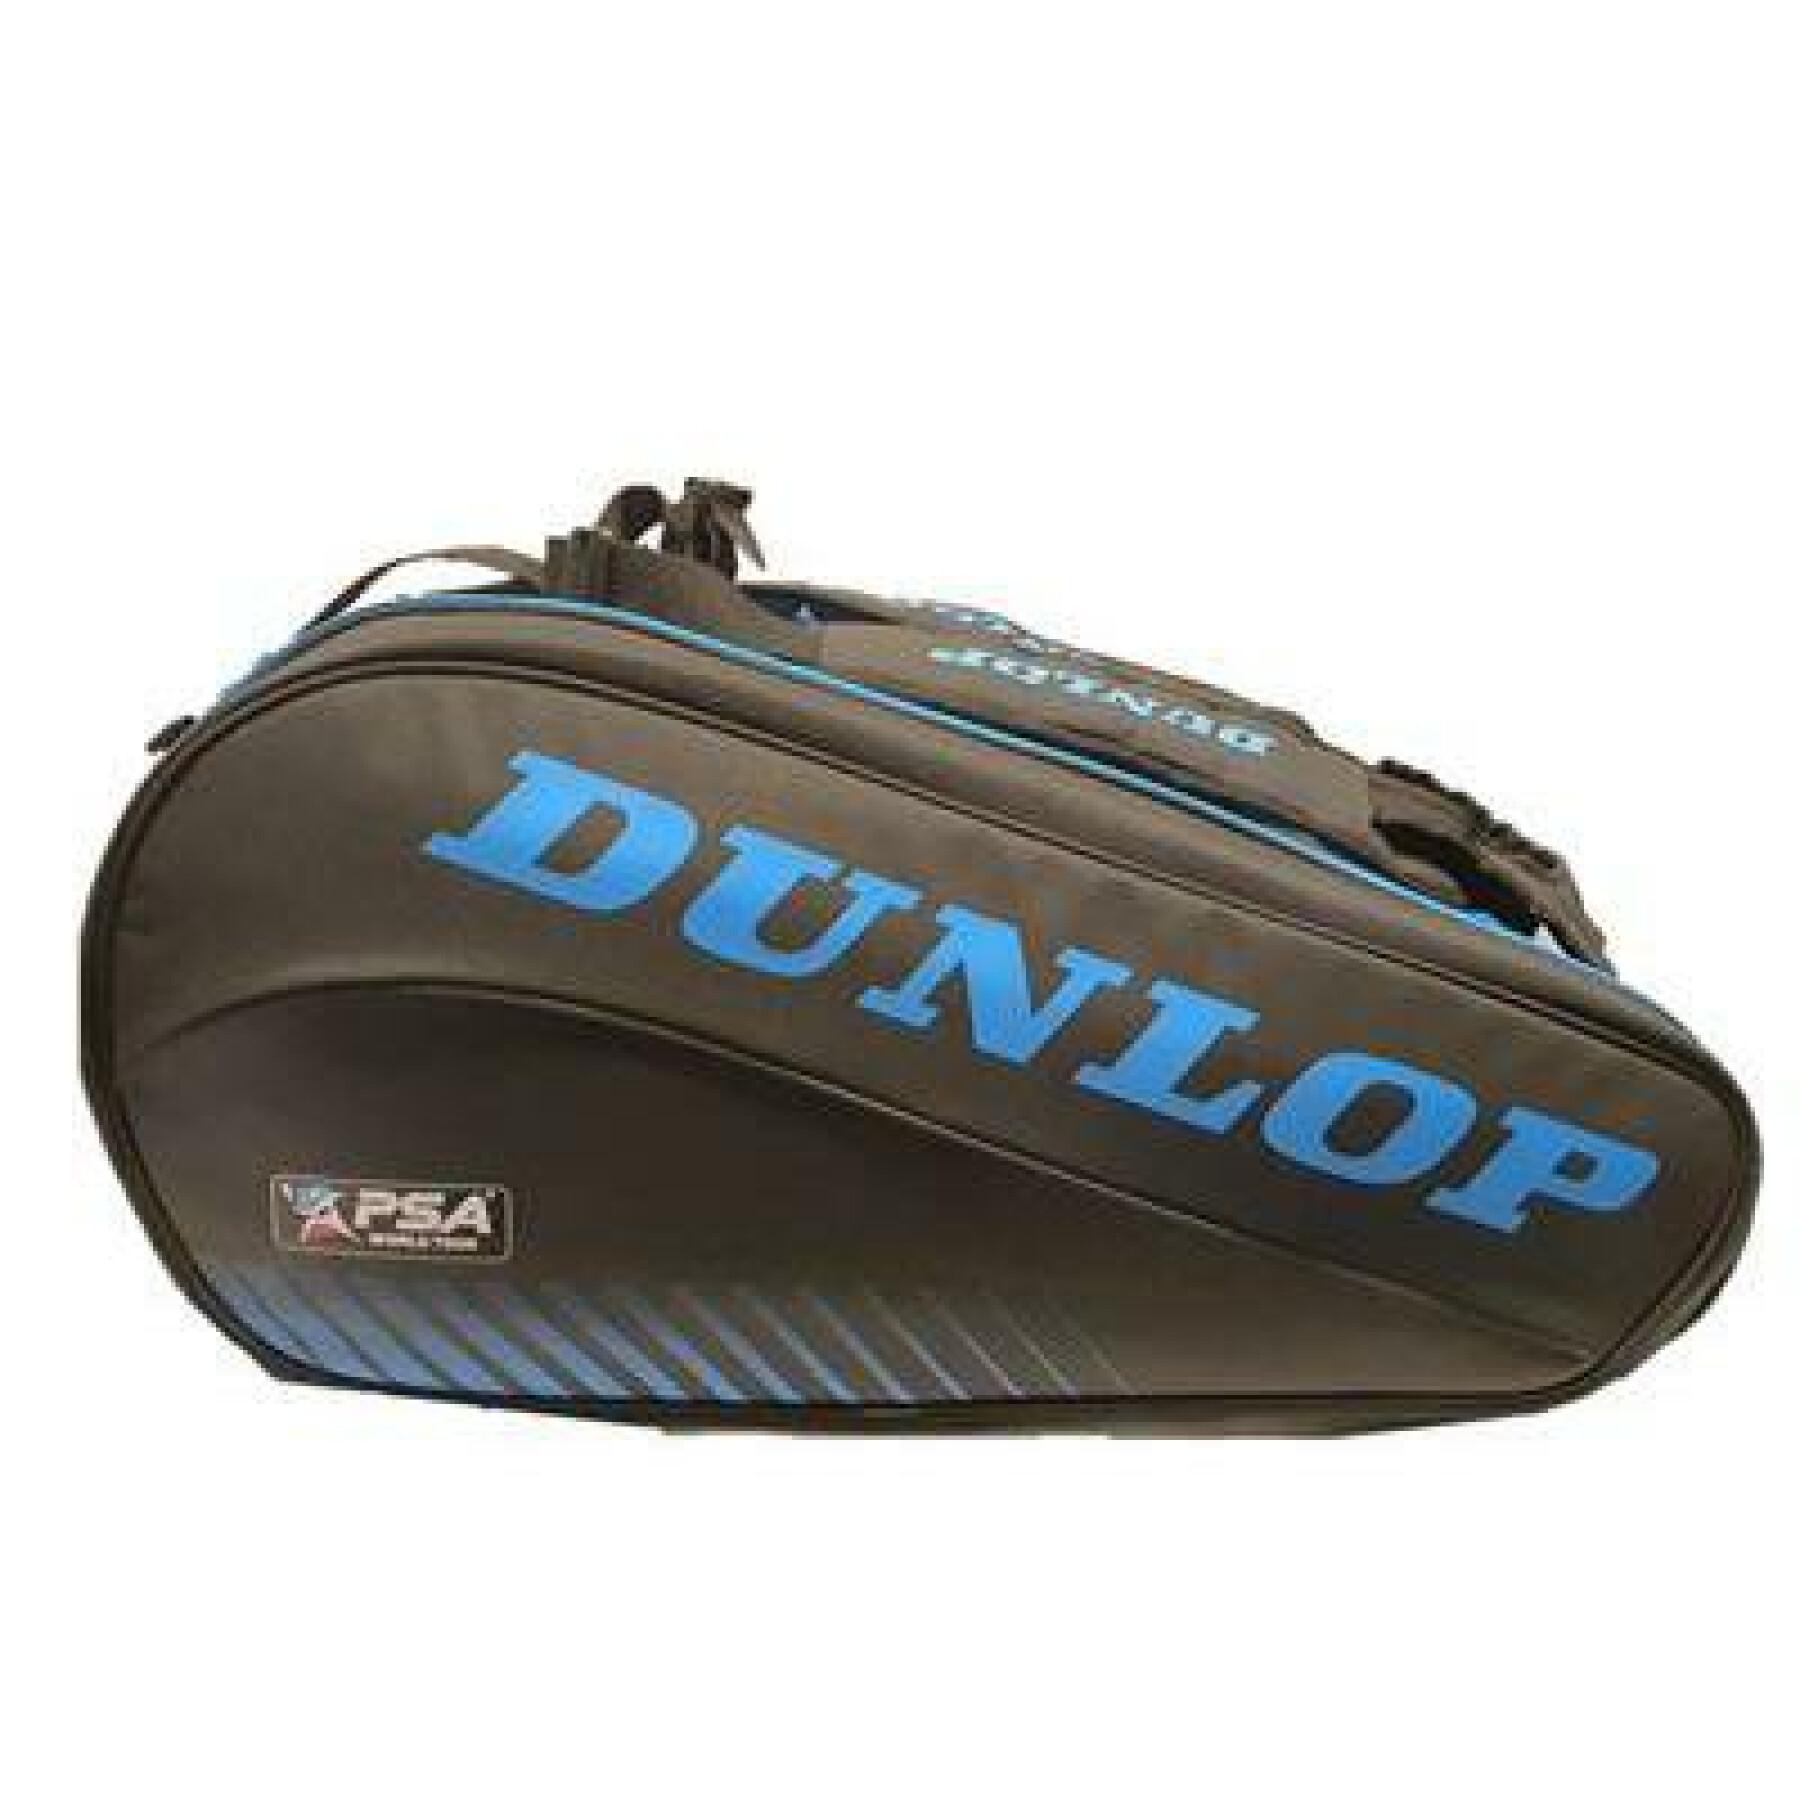 Racquet bag Dunlop psa thermo